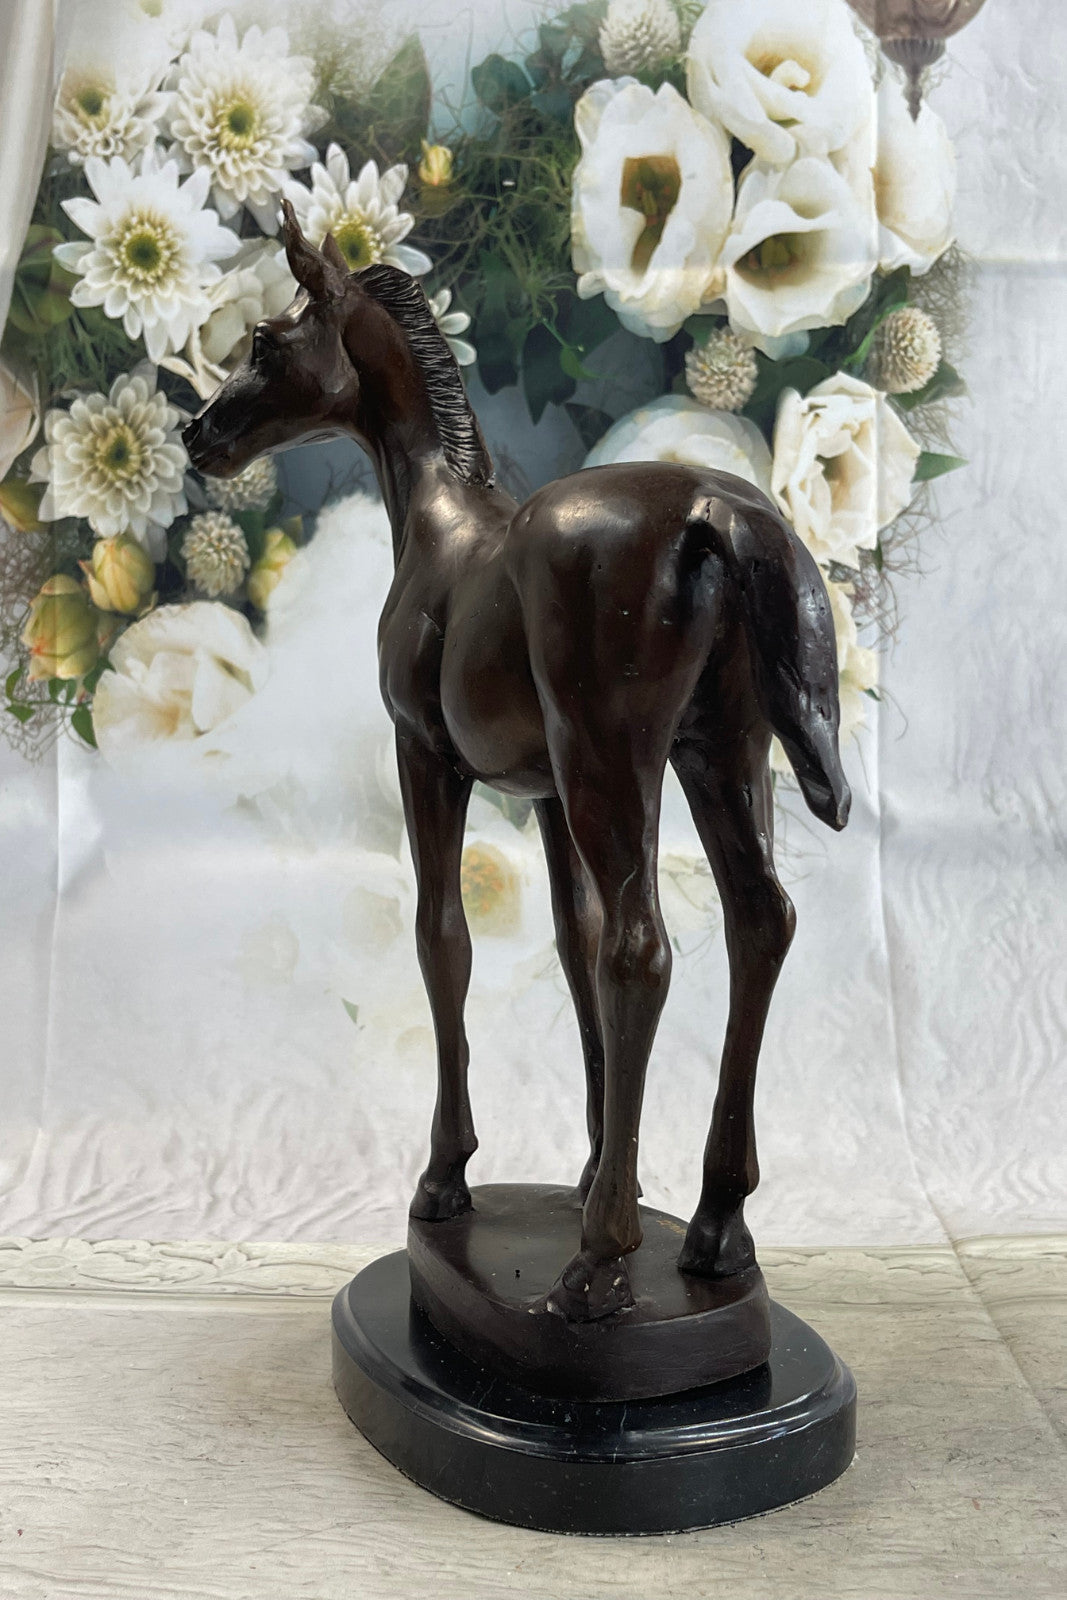 Handcrafted 100% Solid Bronze sculpture SALE  Signed Artwork Home Decoration